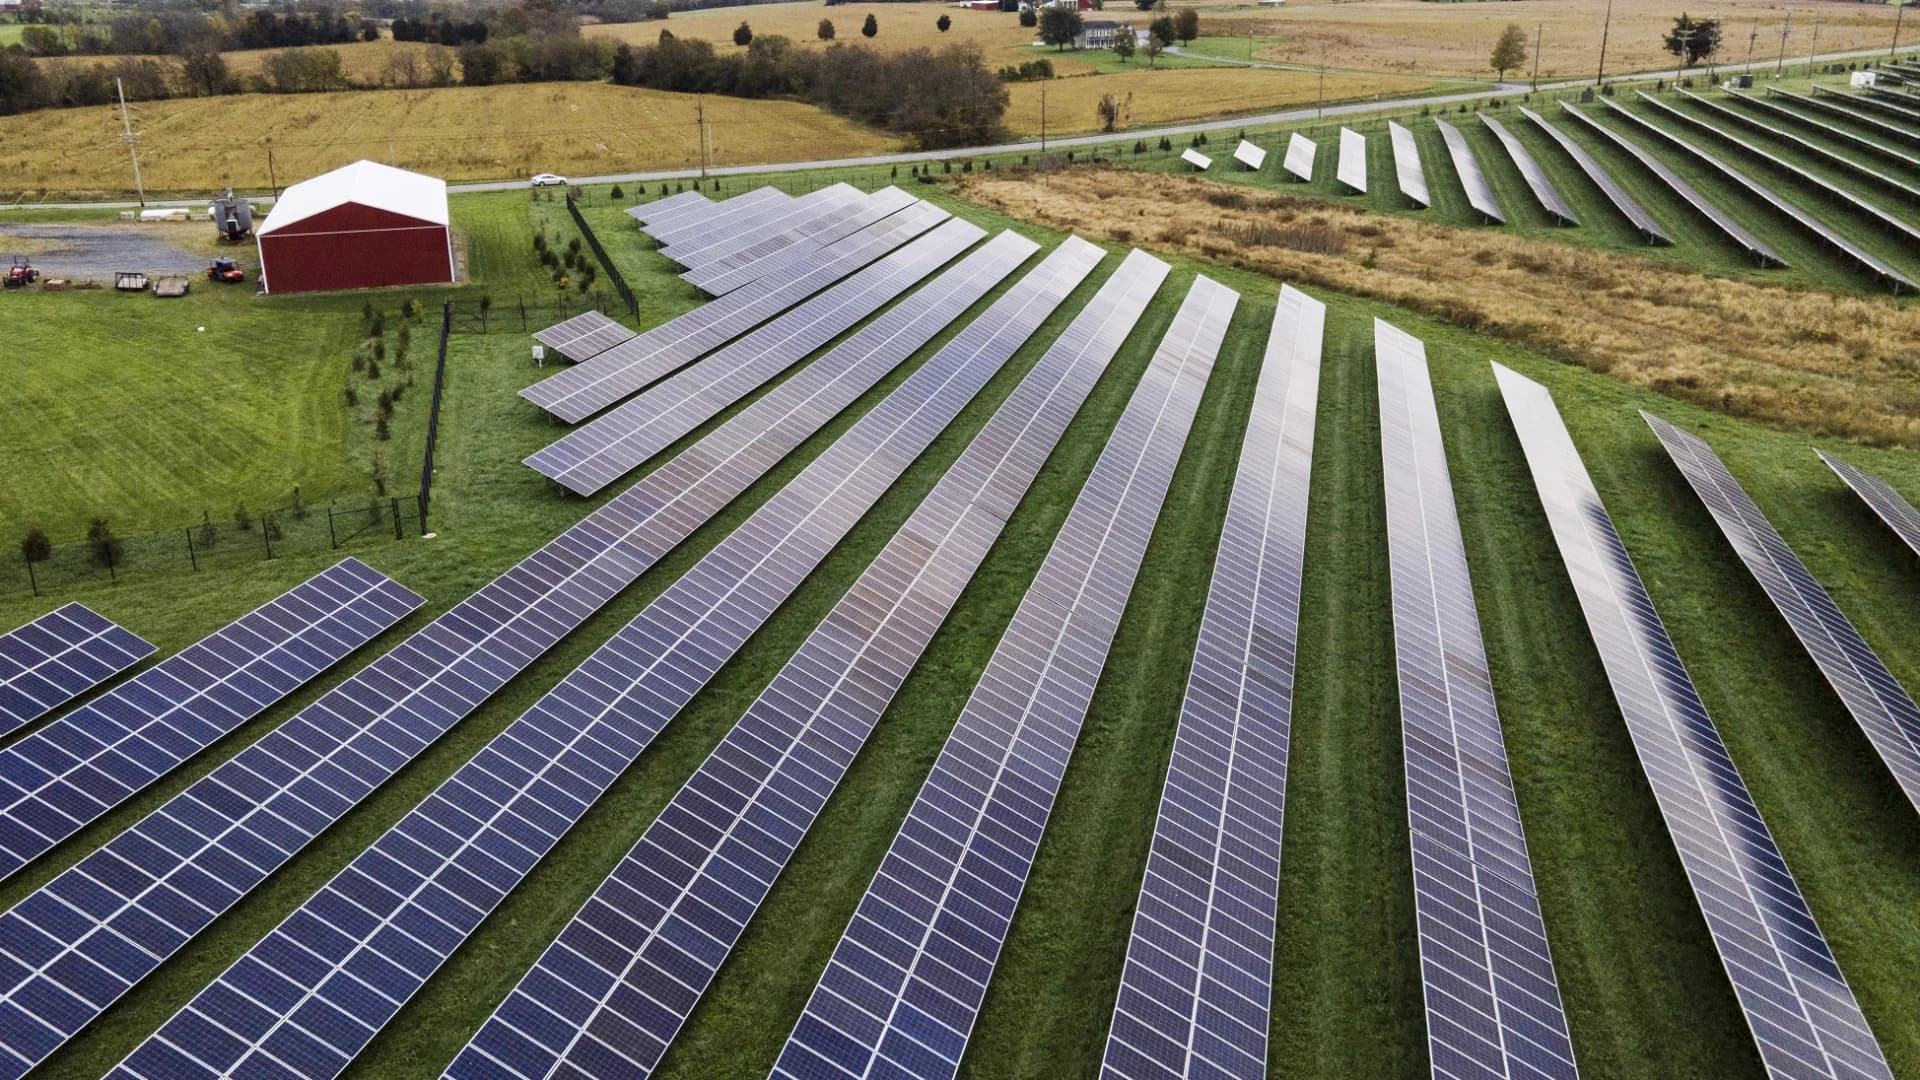 President Biden waives solar panel tariffs, seeks to boost production